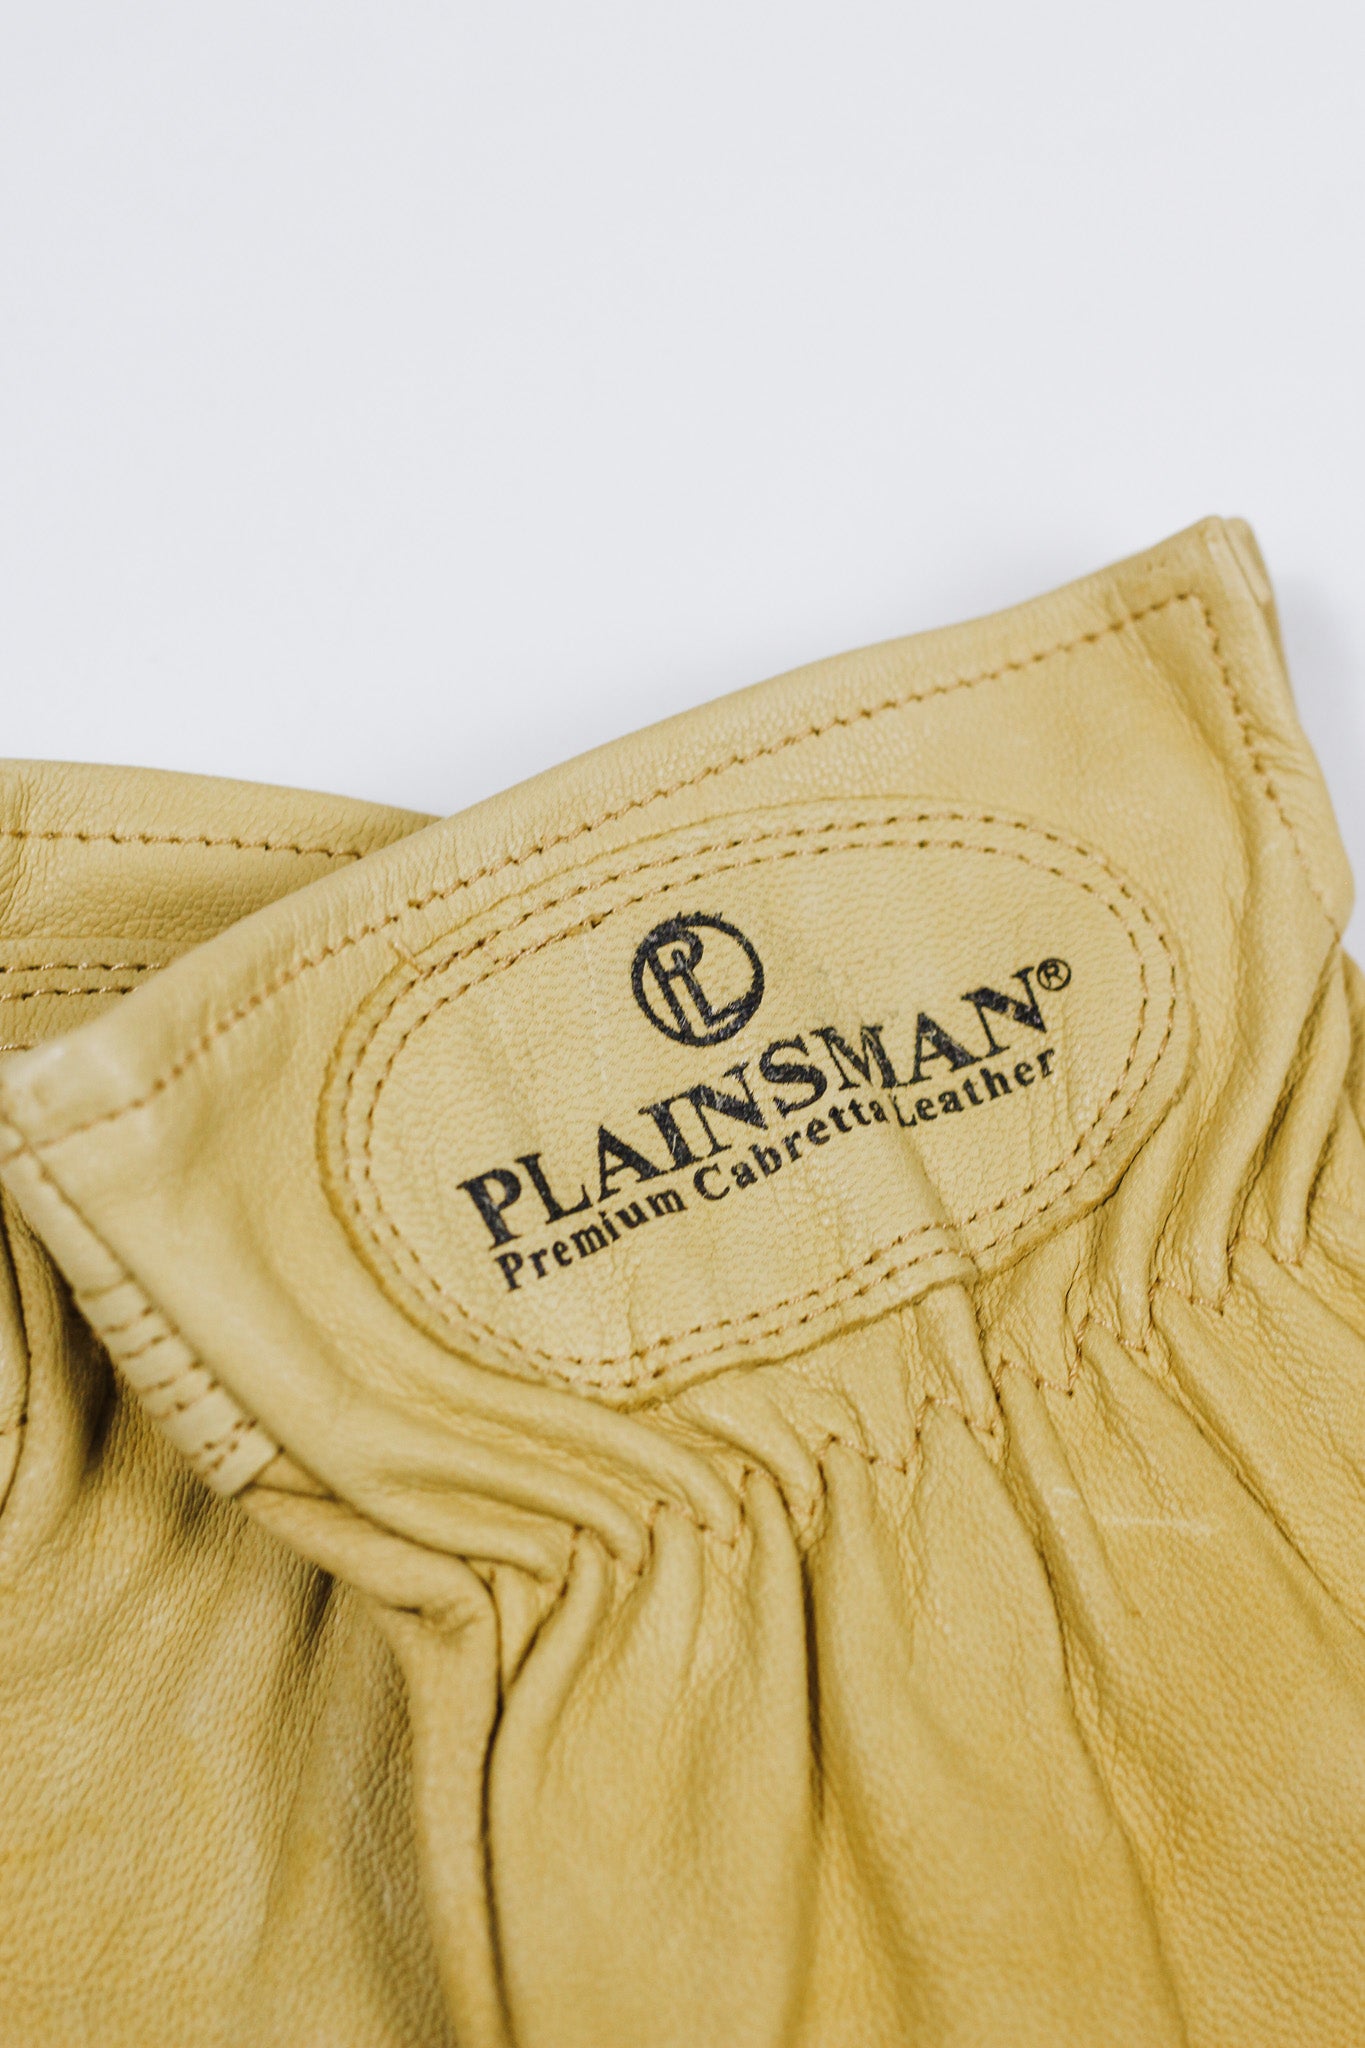 Plainsman Goatskin Tan Leather Gloves